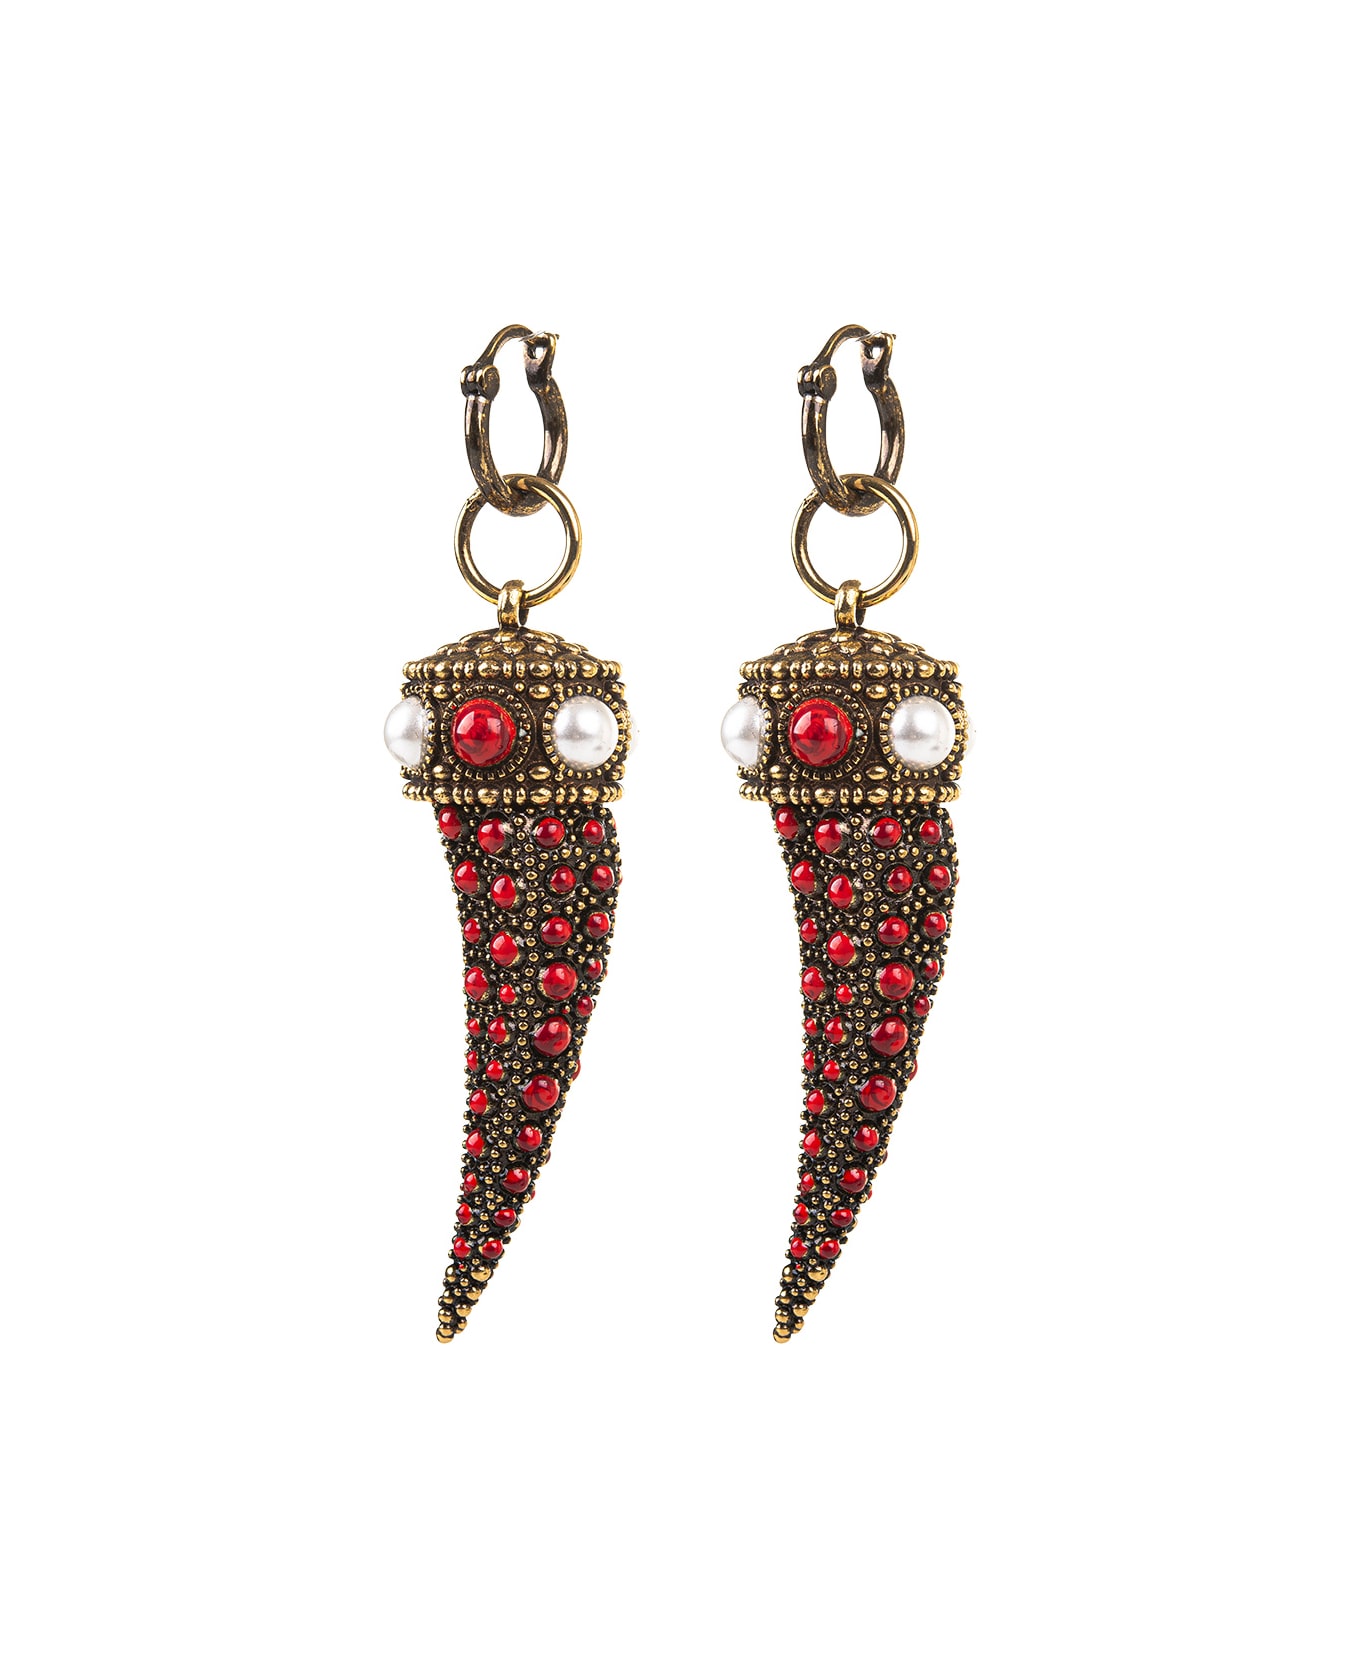 Roberto Cavalli Pendant Earrings With Coral Stones - Gold イヤリング